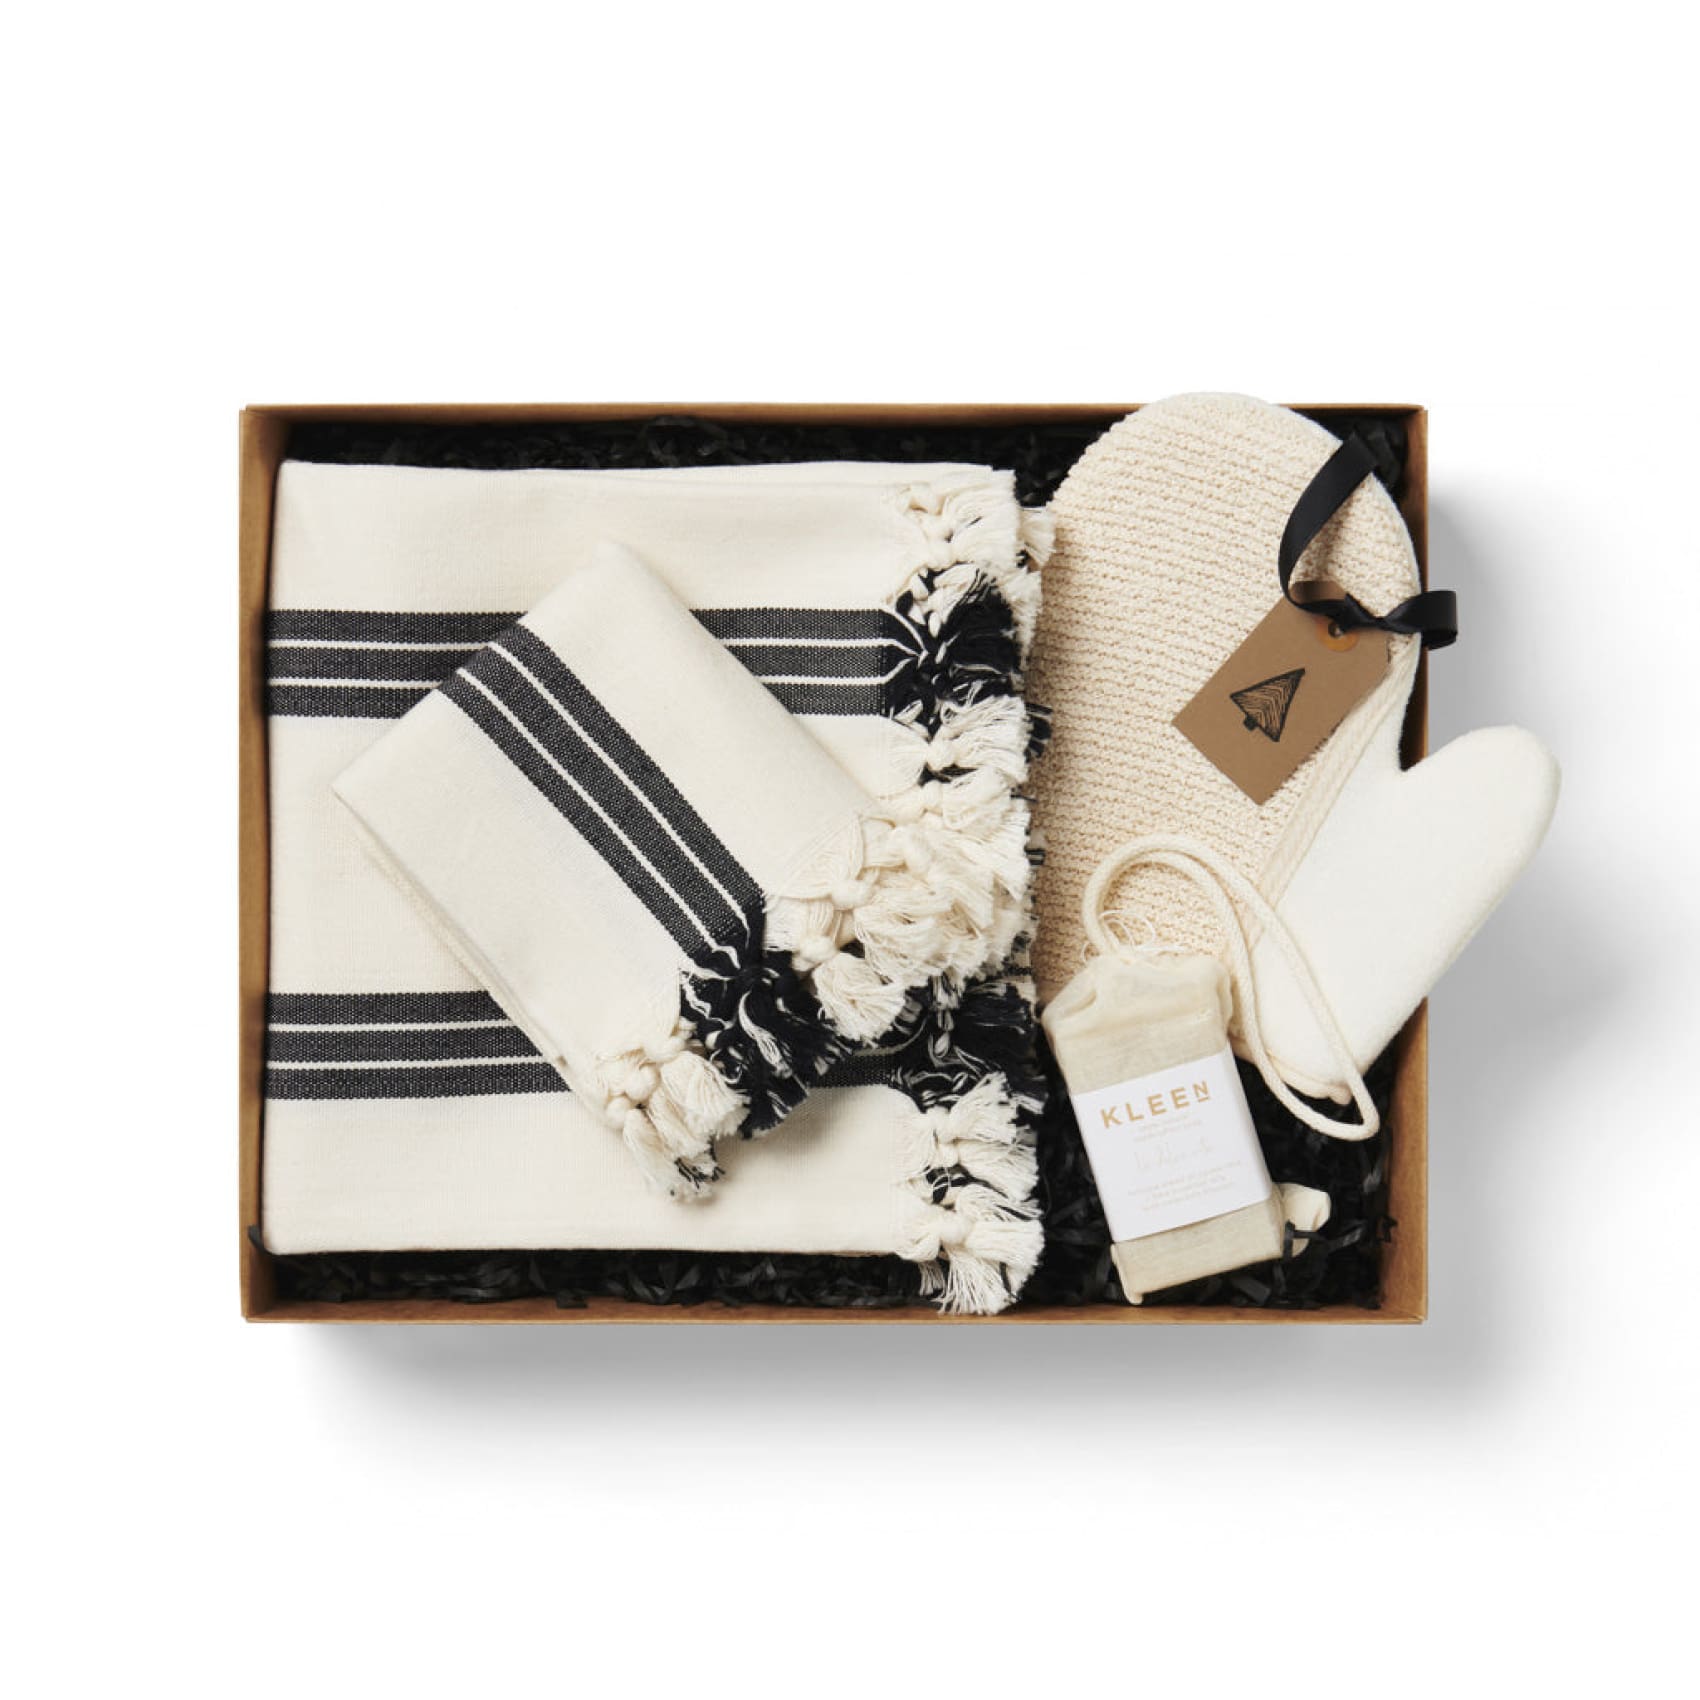 capella-hammam-at-home-gift-set-exfoliating-glove-sets-hair-towel-bath-body-lueks-linen-luks-beige-petal-fashion-667.jpg